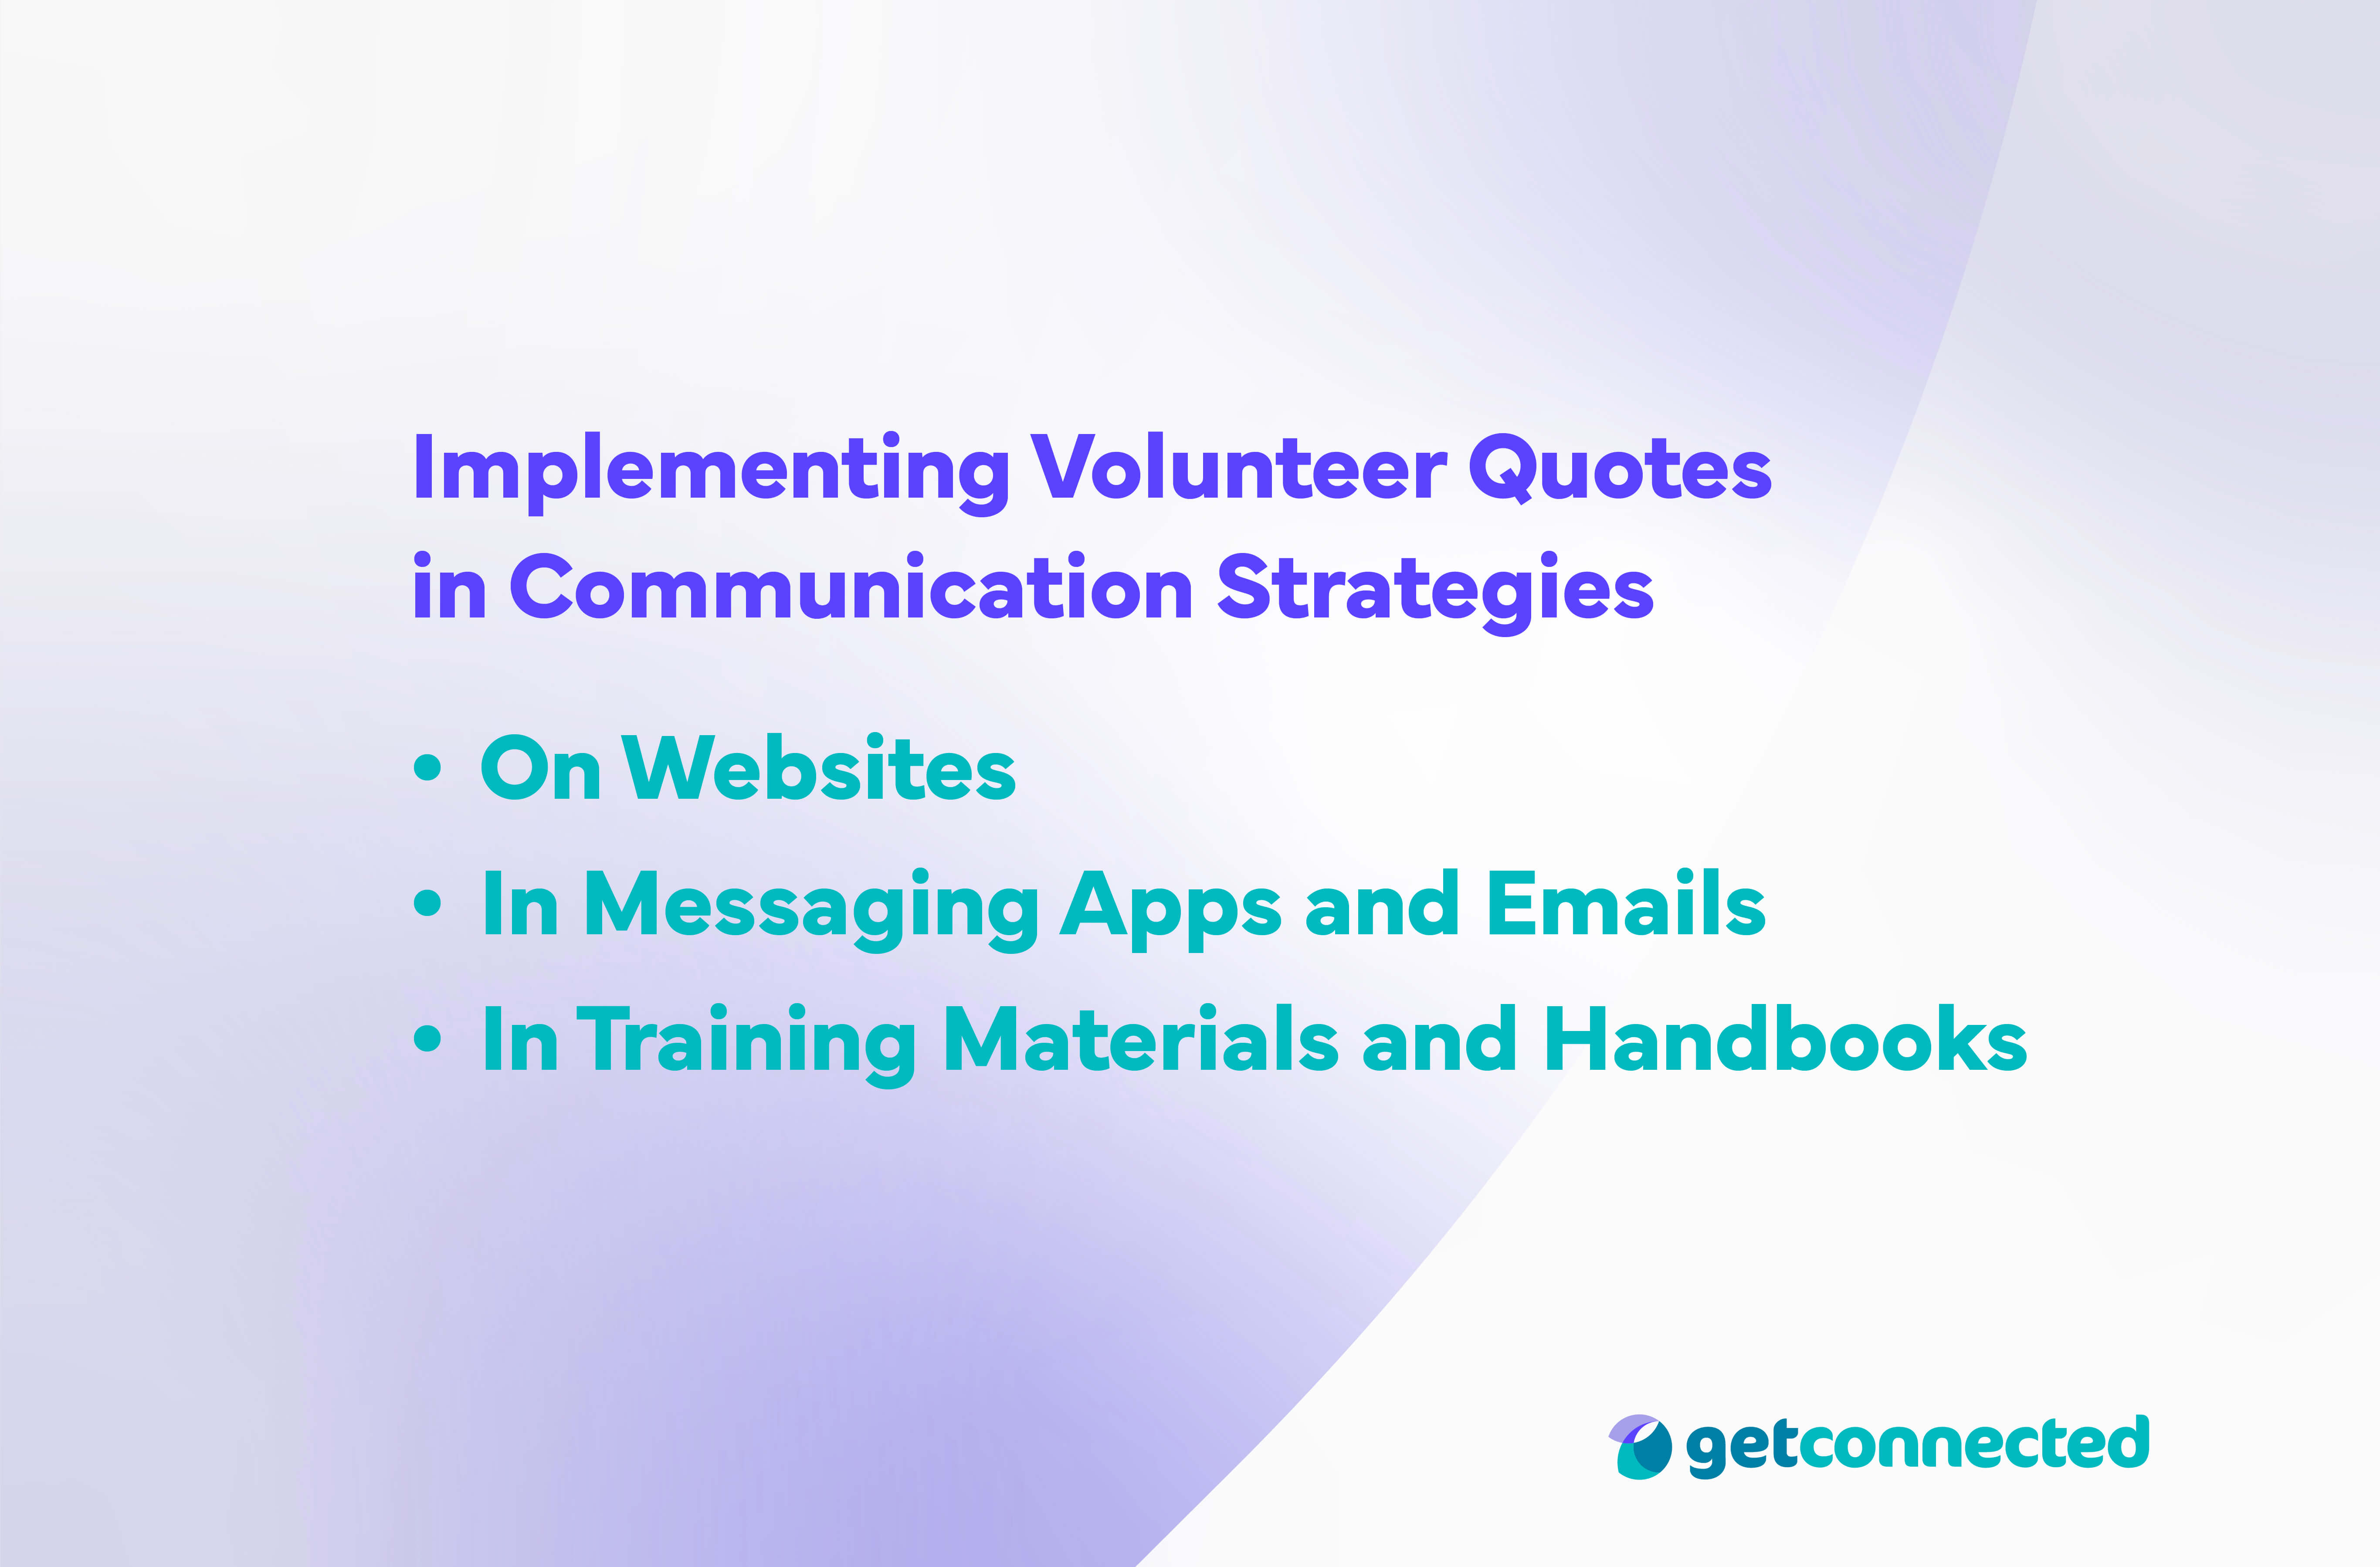 Volunteer-Quotes-implementing volunteer quotes in communication strategies (14)